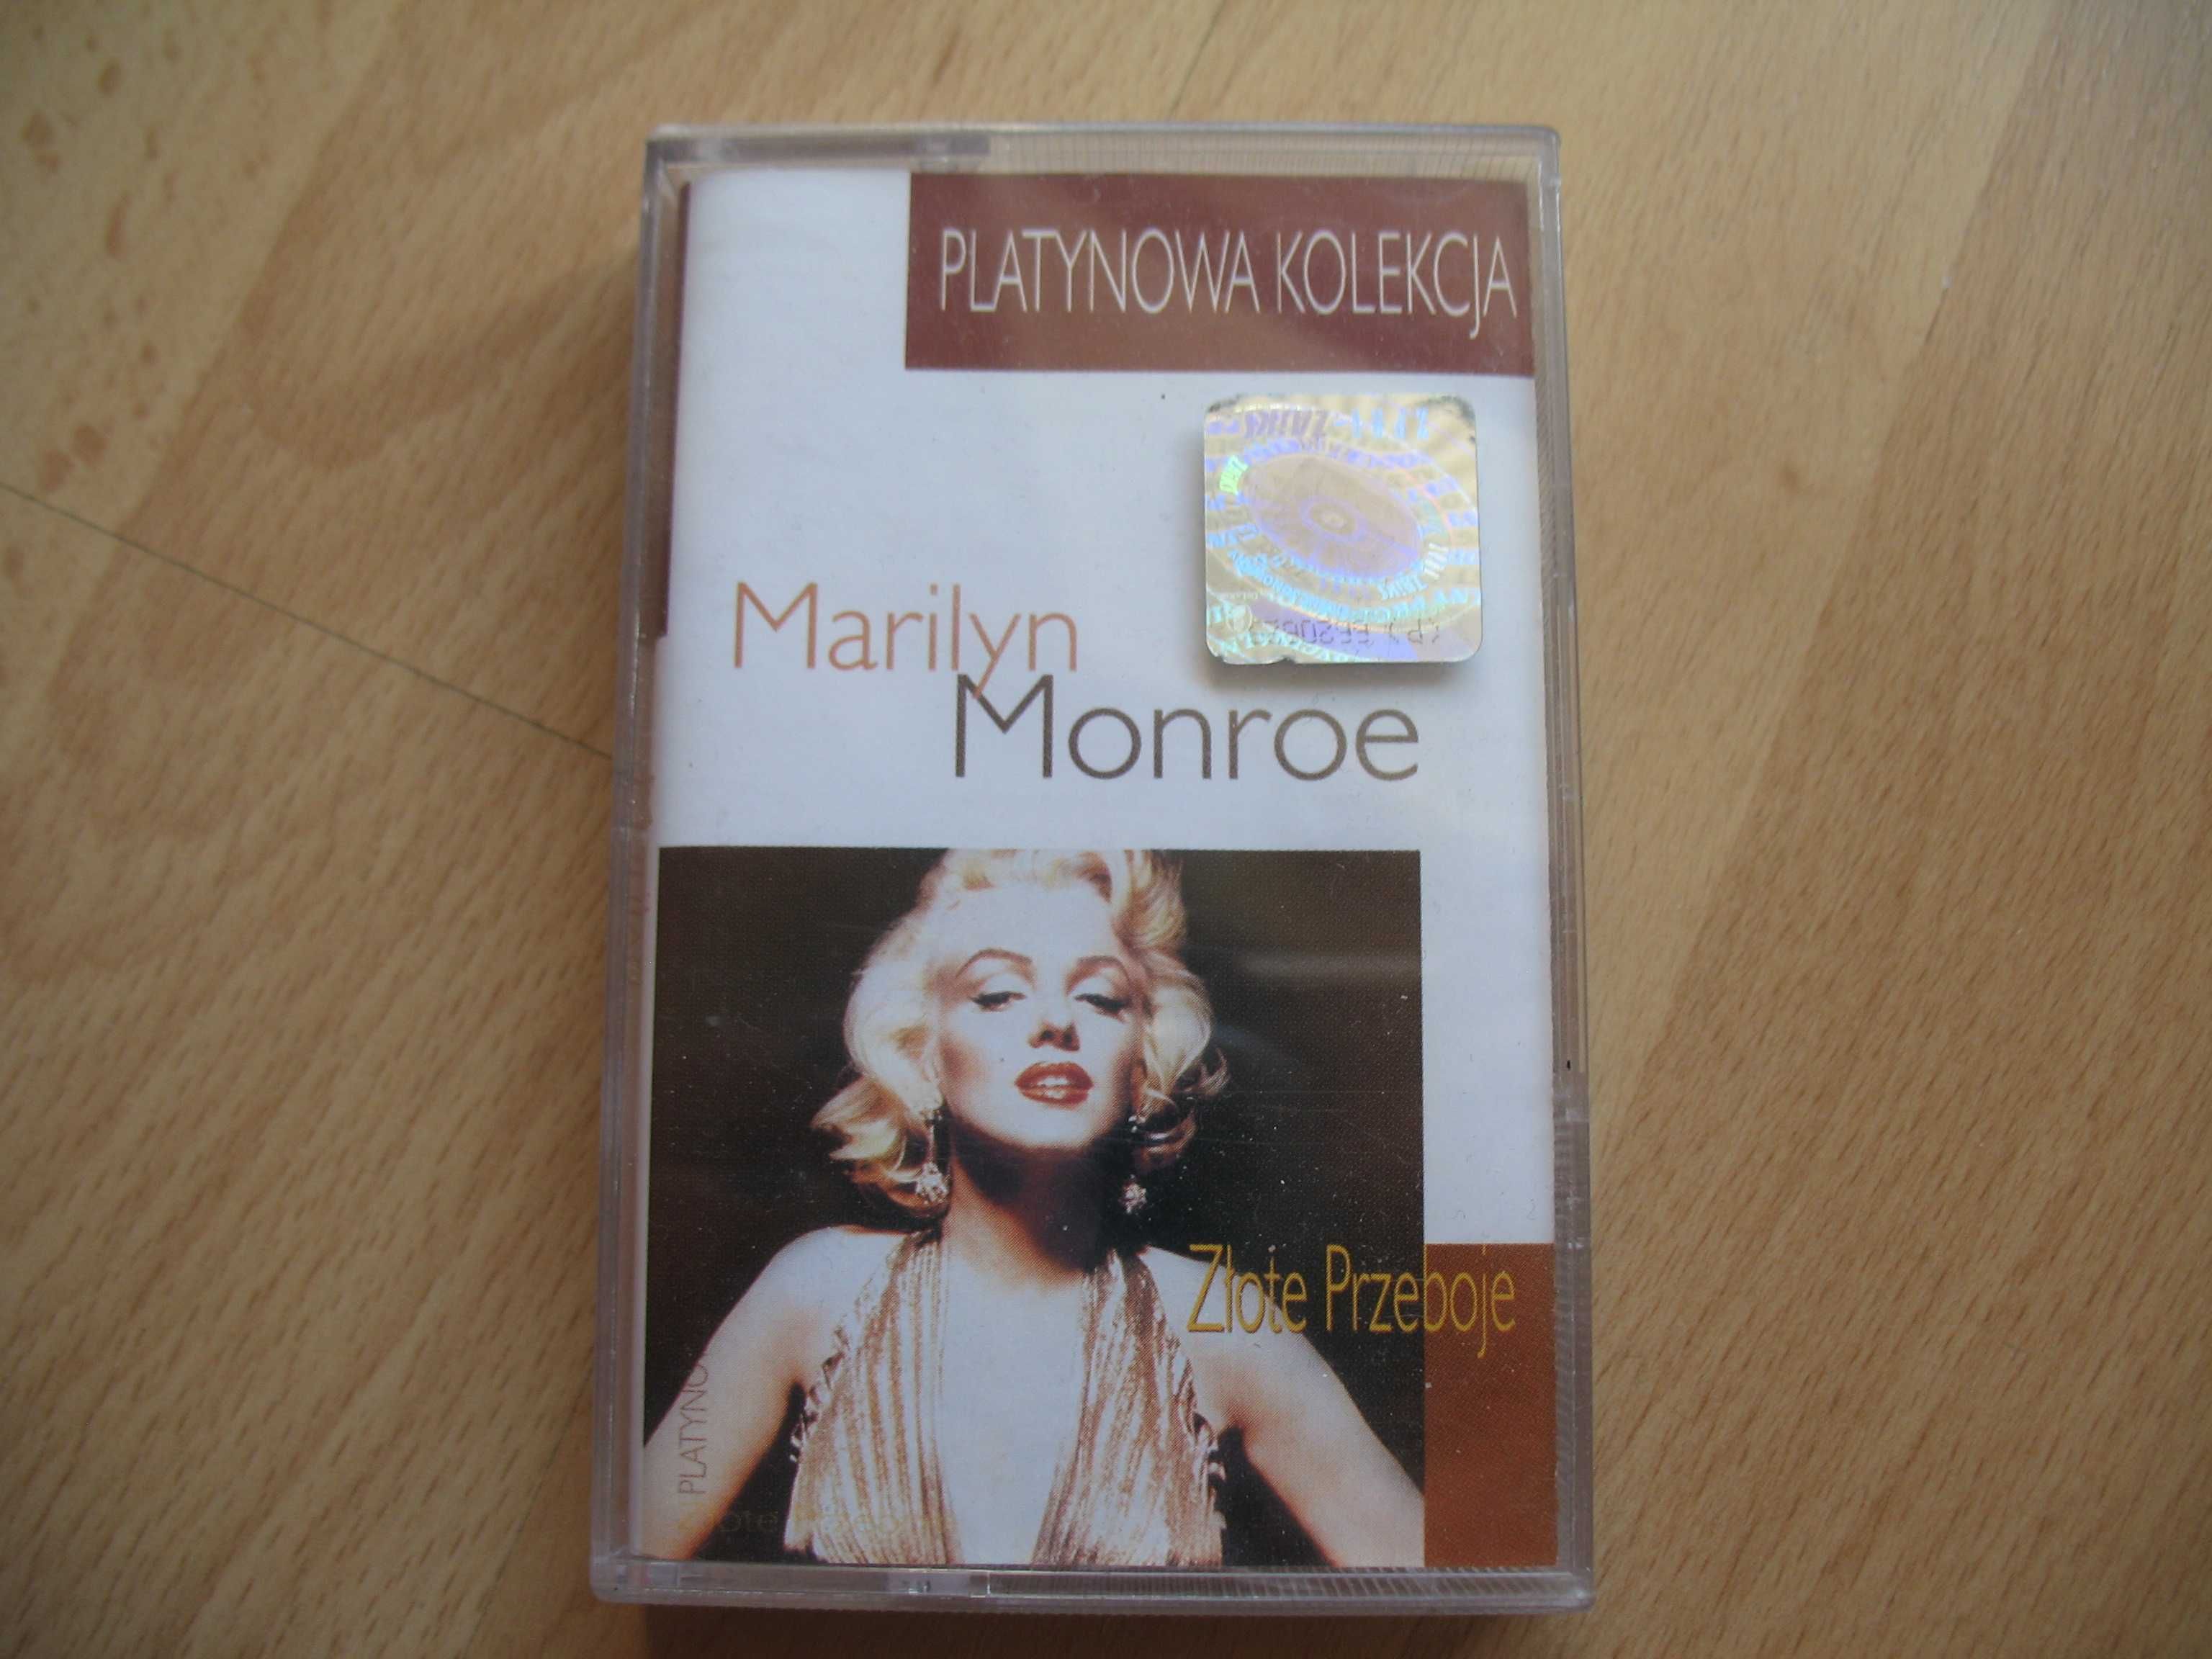 Marilyn Monroe kaseta audio z piosenkami